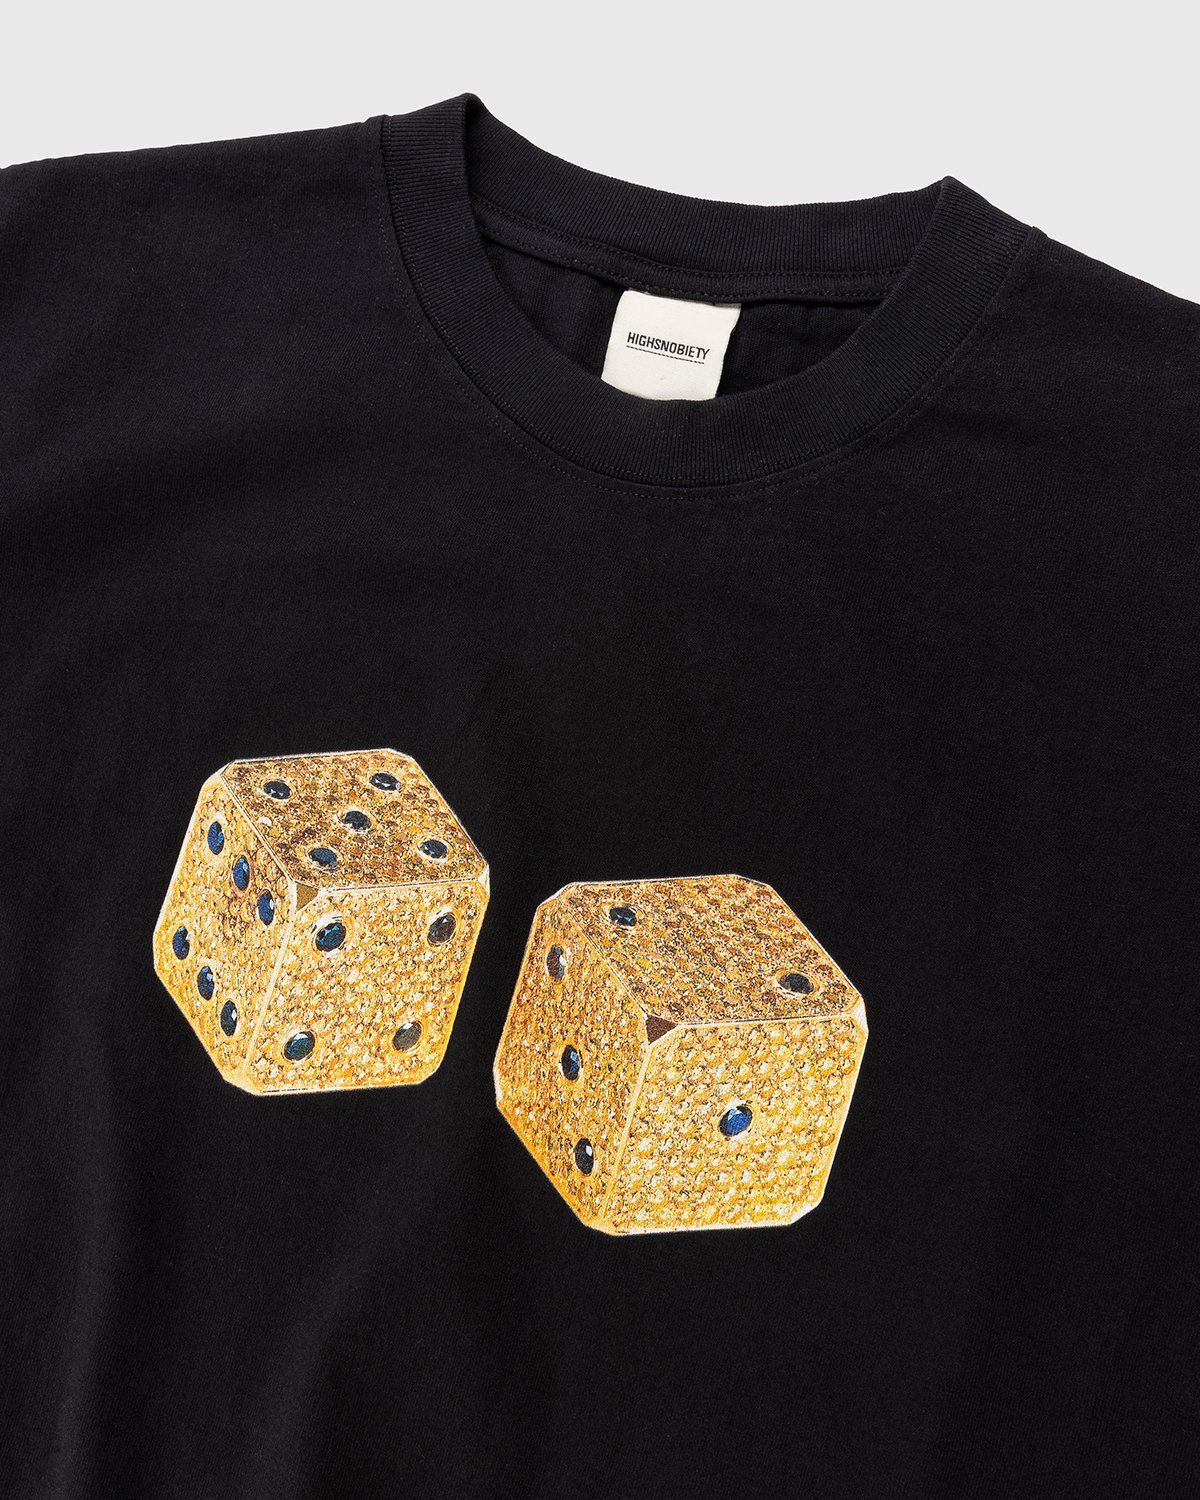 Jacob & Co. x Highsnobiety – Diamond Dice T-Shirt Black - Image 6